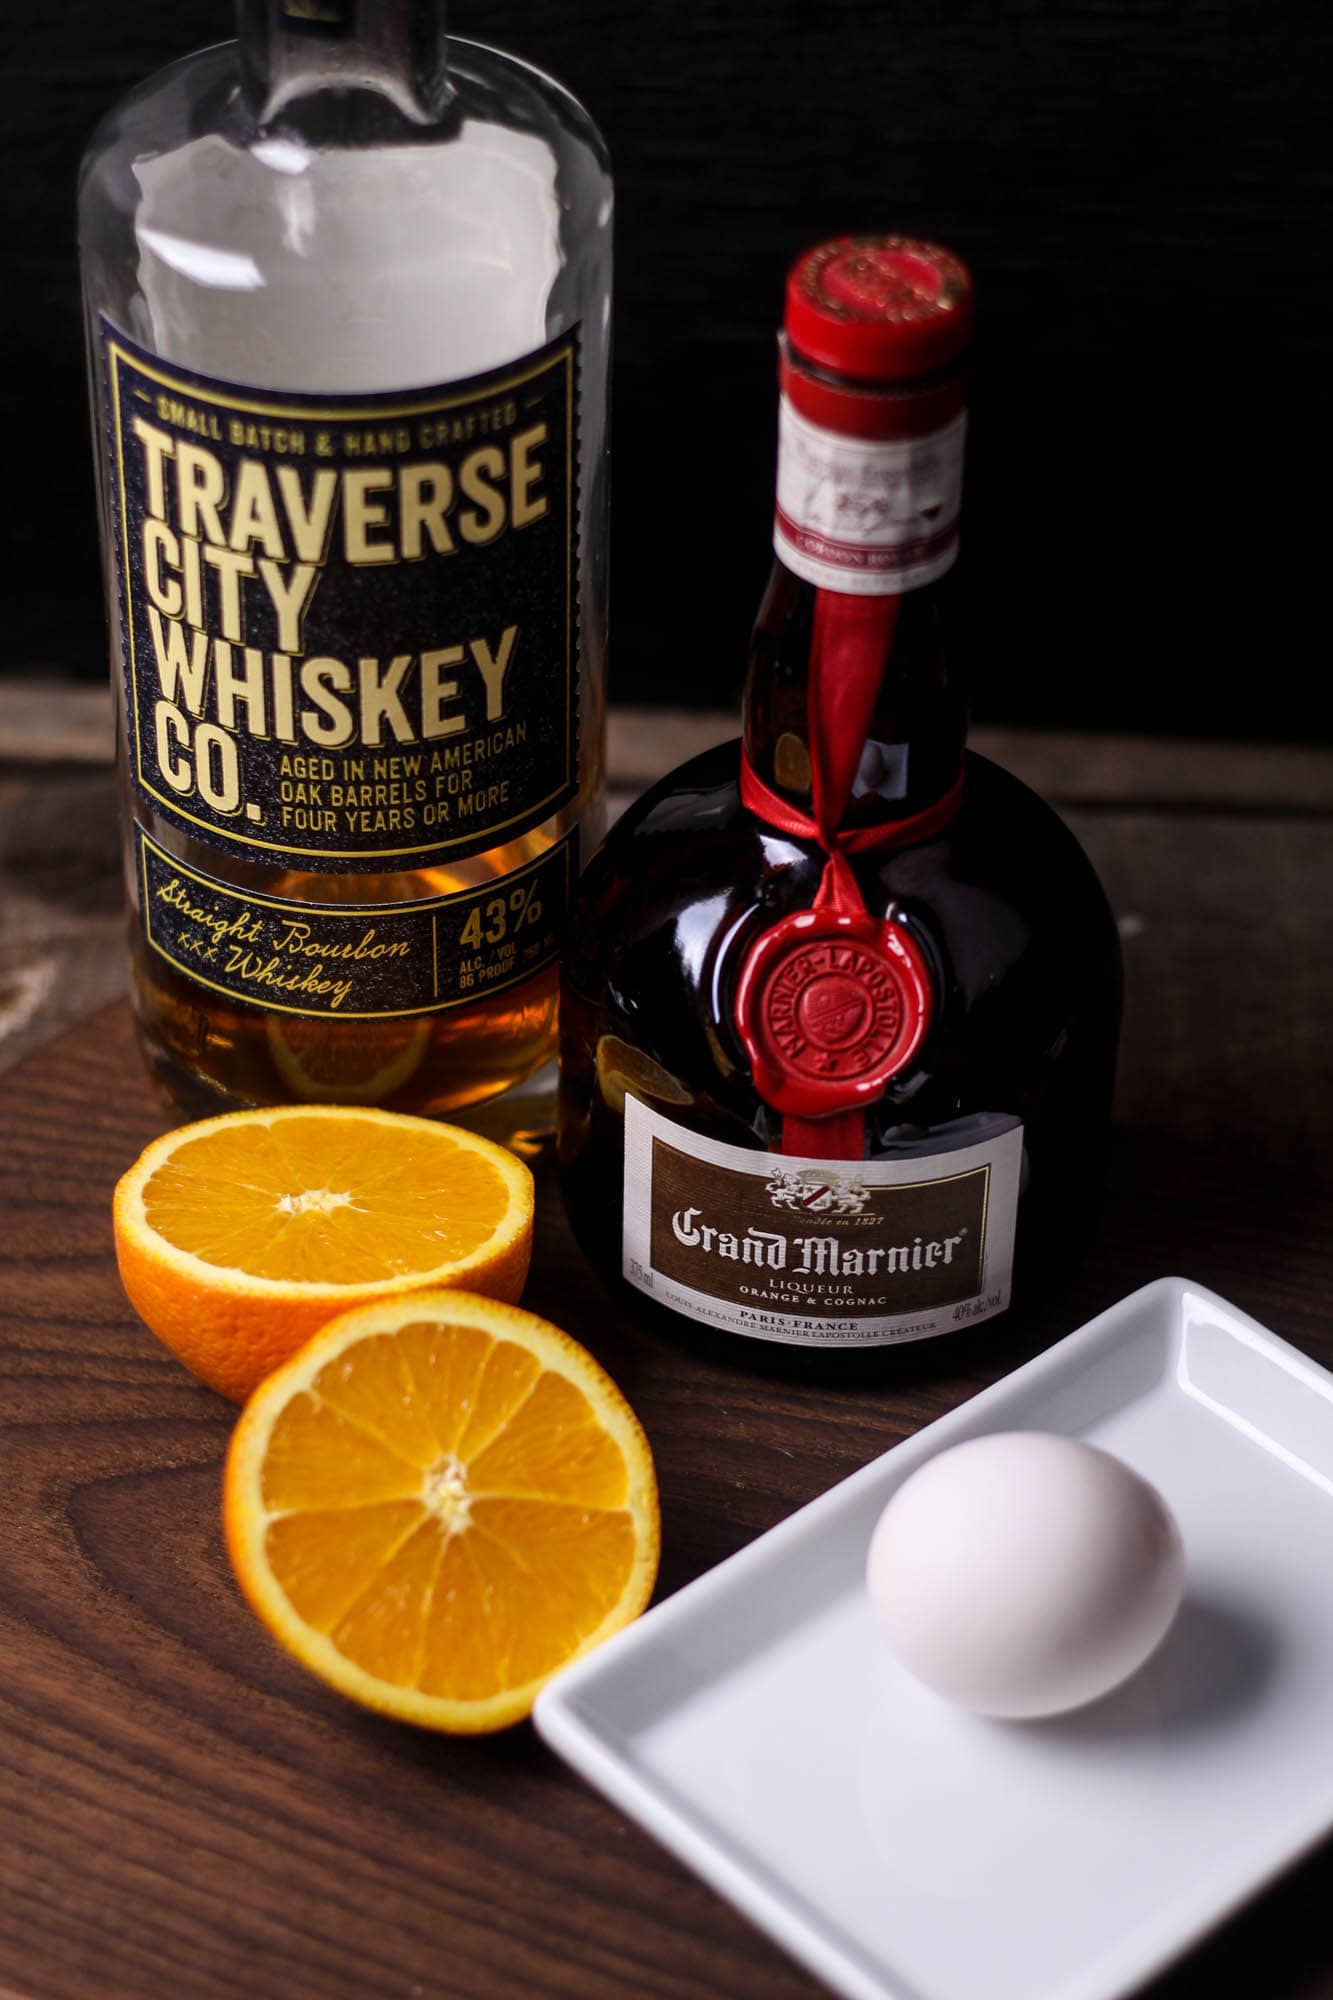 Traverse City Whiskey, Grand Marnier Liqueur, a sliced orange, and an egg